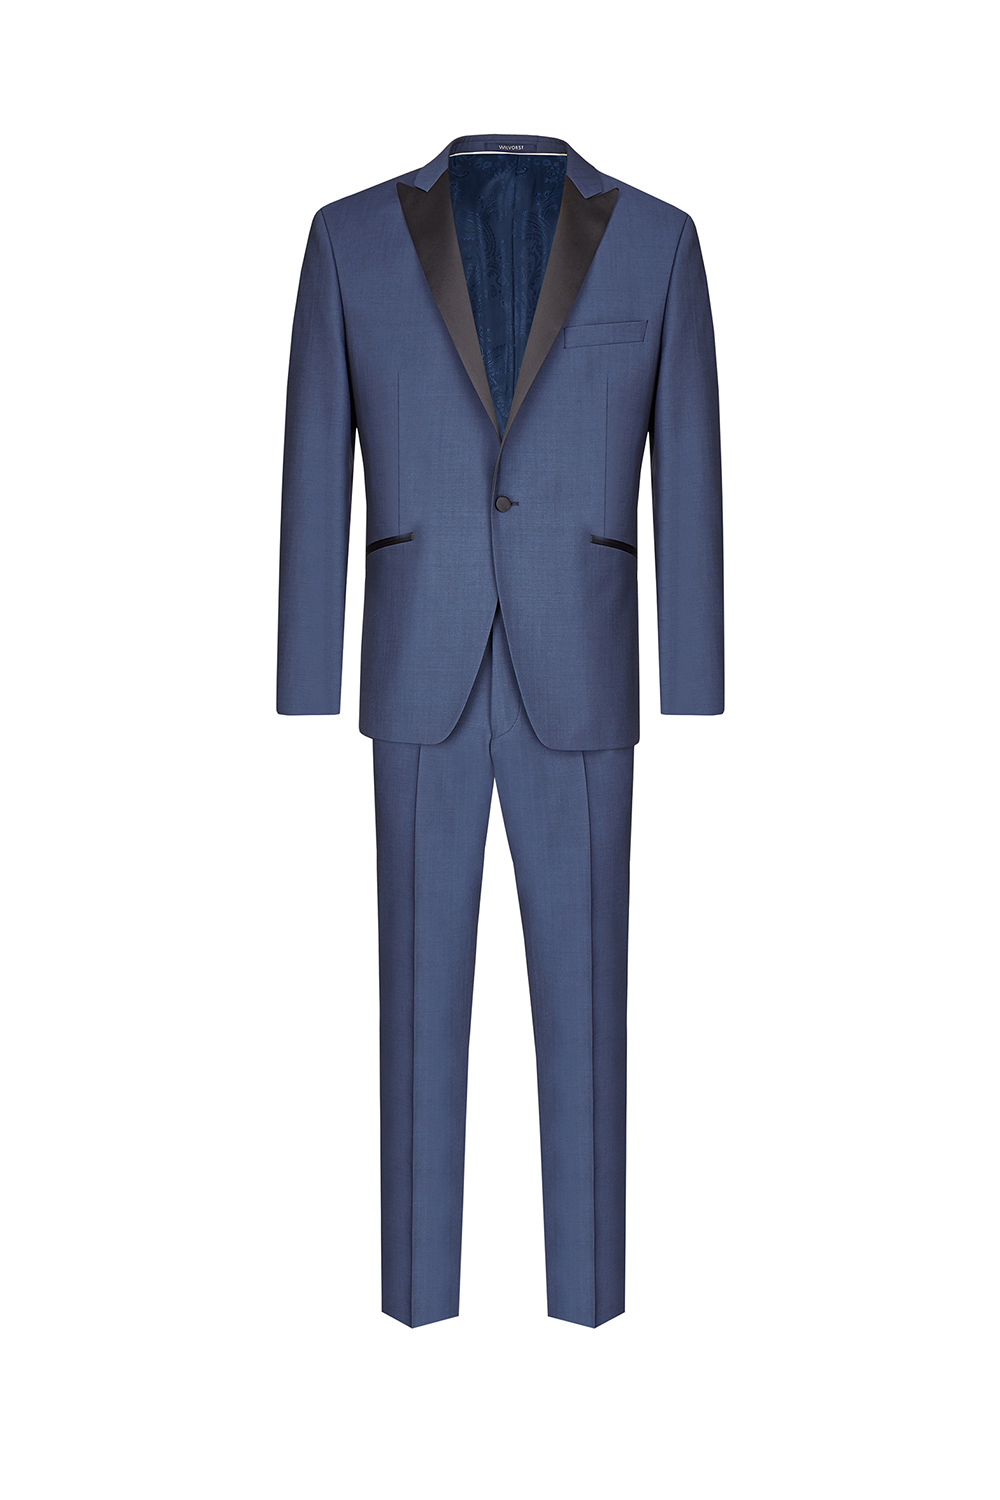 Blue Black Contrast Slim Fit Tuxedo - Tom Murphy's Formal and Menswear